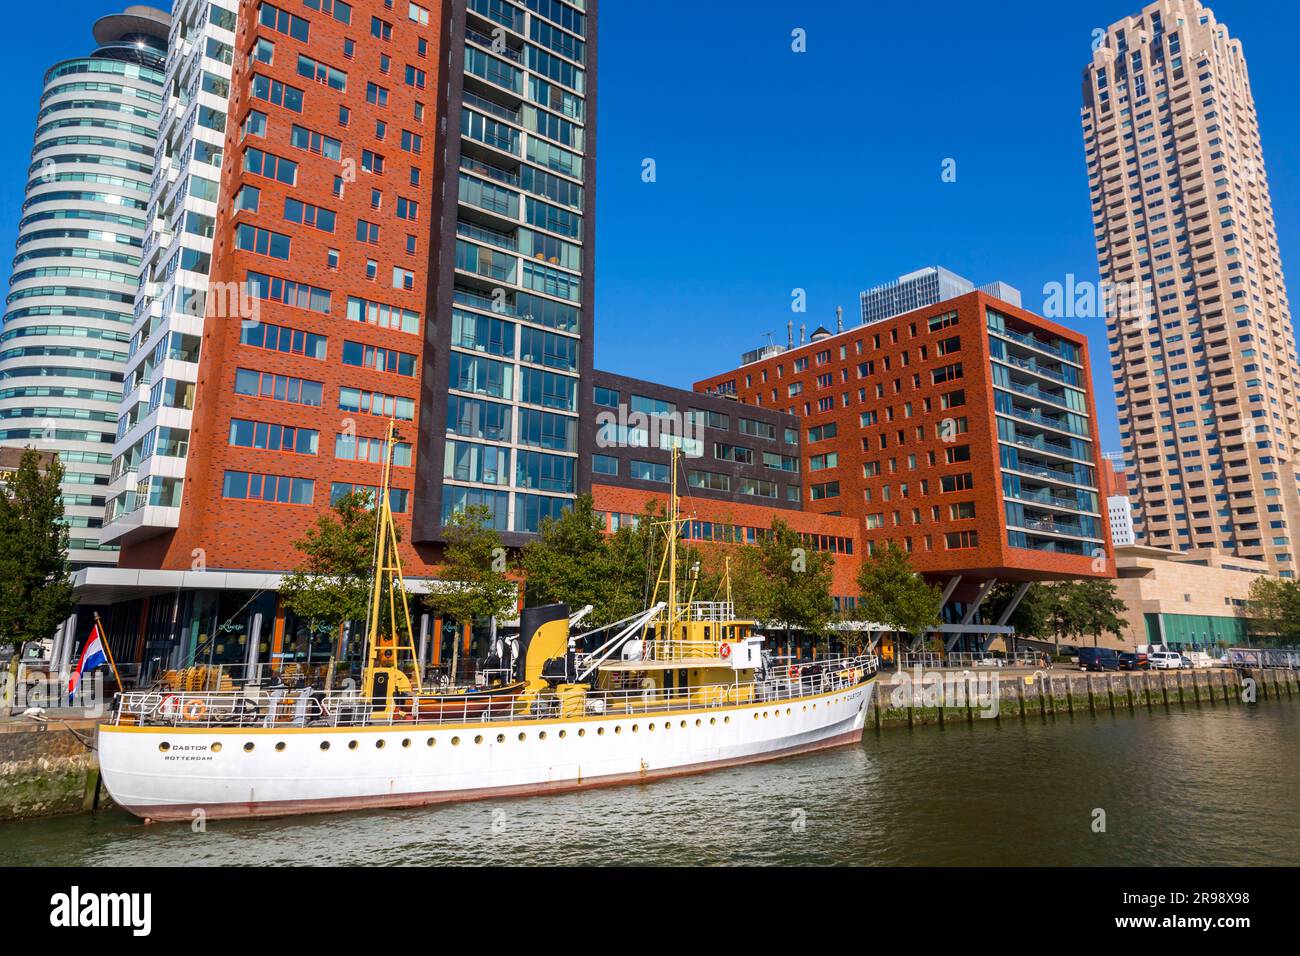 Rotterdam, Paesi Bassi - 8 ottobre 2021: Moderne torri commerciali situate lungo la riva del fiume Nieuwe Maas, Rotterdam, Paesi Bassi. Foto Stock